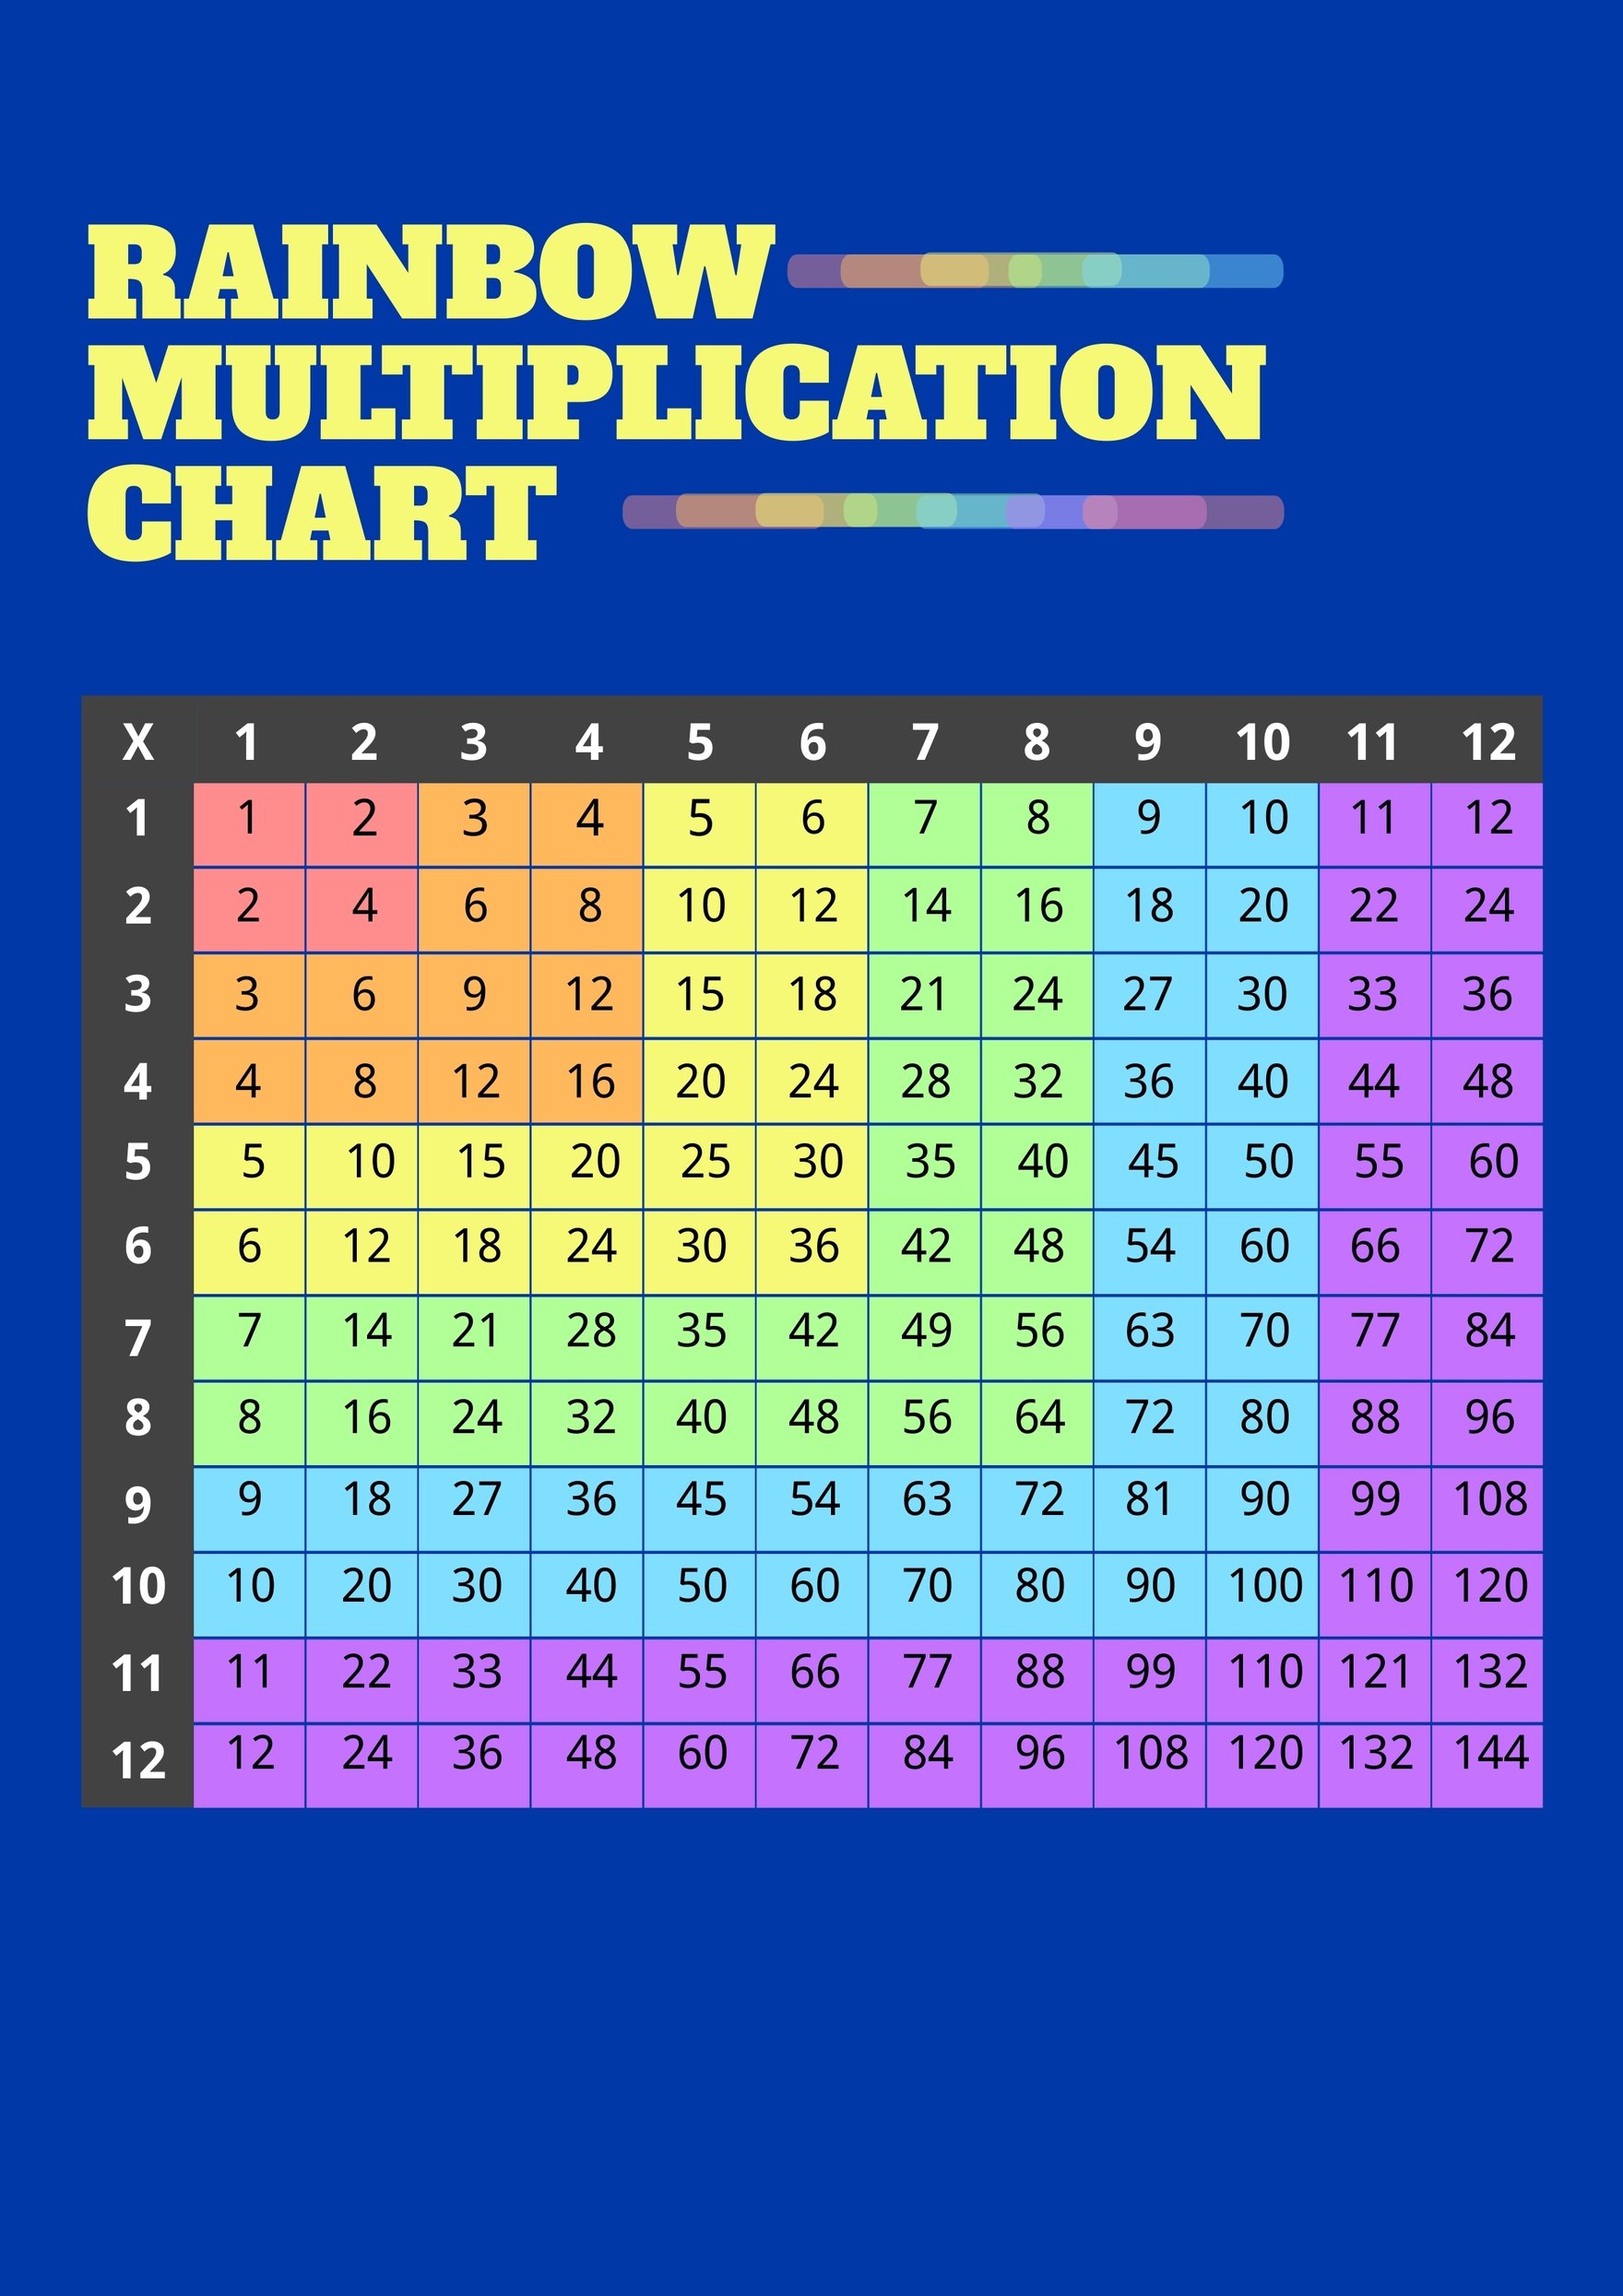 Rainbow multiplication chart template in PDF, Illustrator